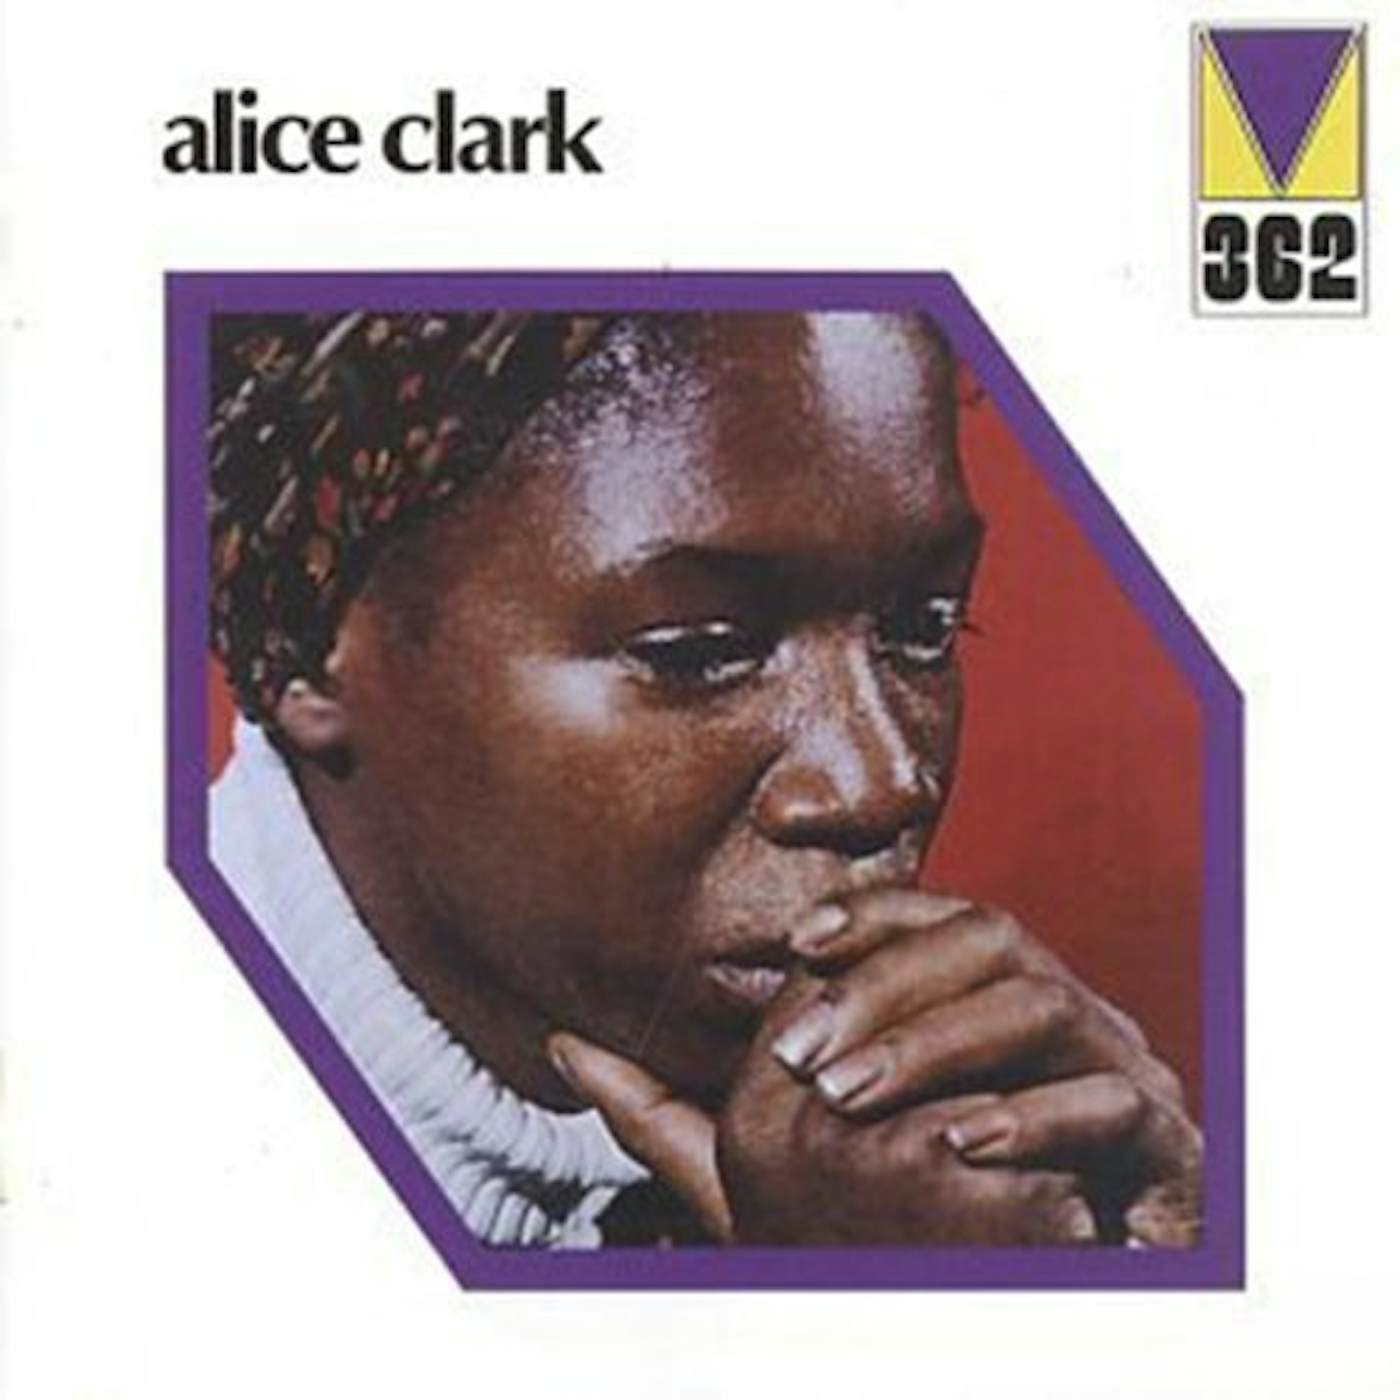 ALICE CLARK (REMASTER) CD